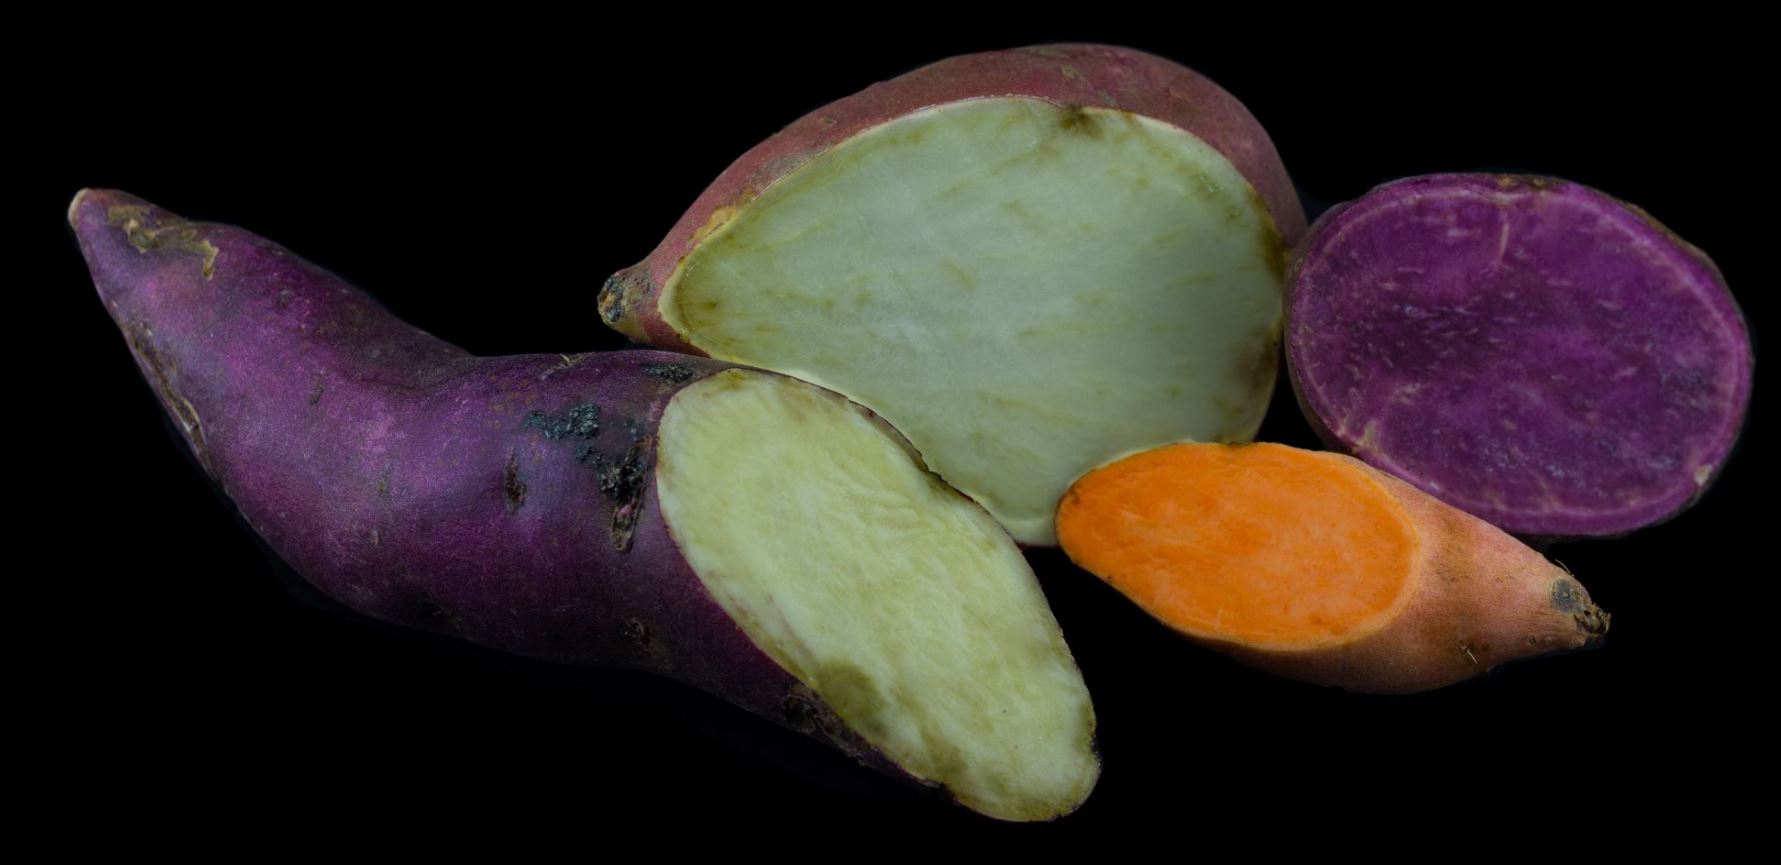 Batatas Doce com Polpas Coloridas (Ipomoea batatas)